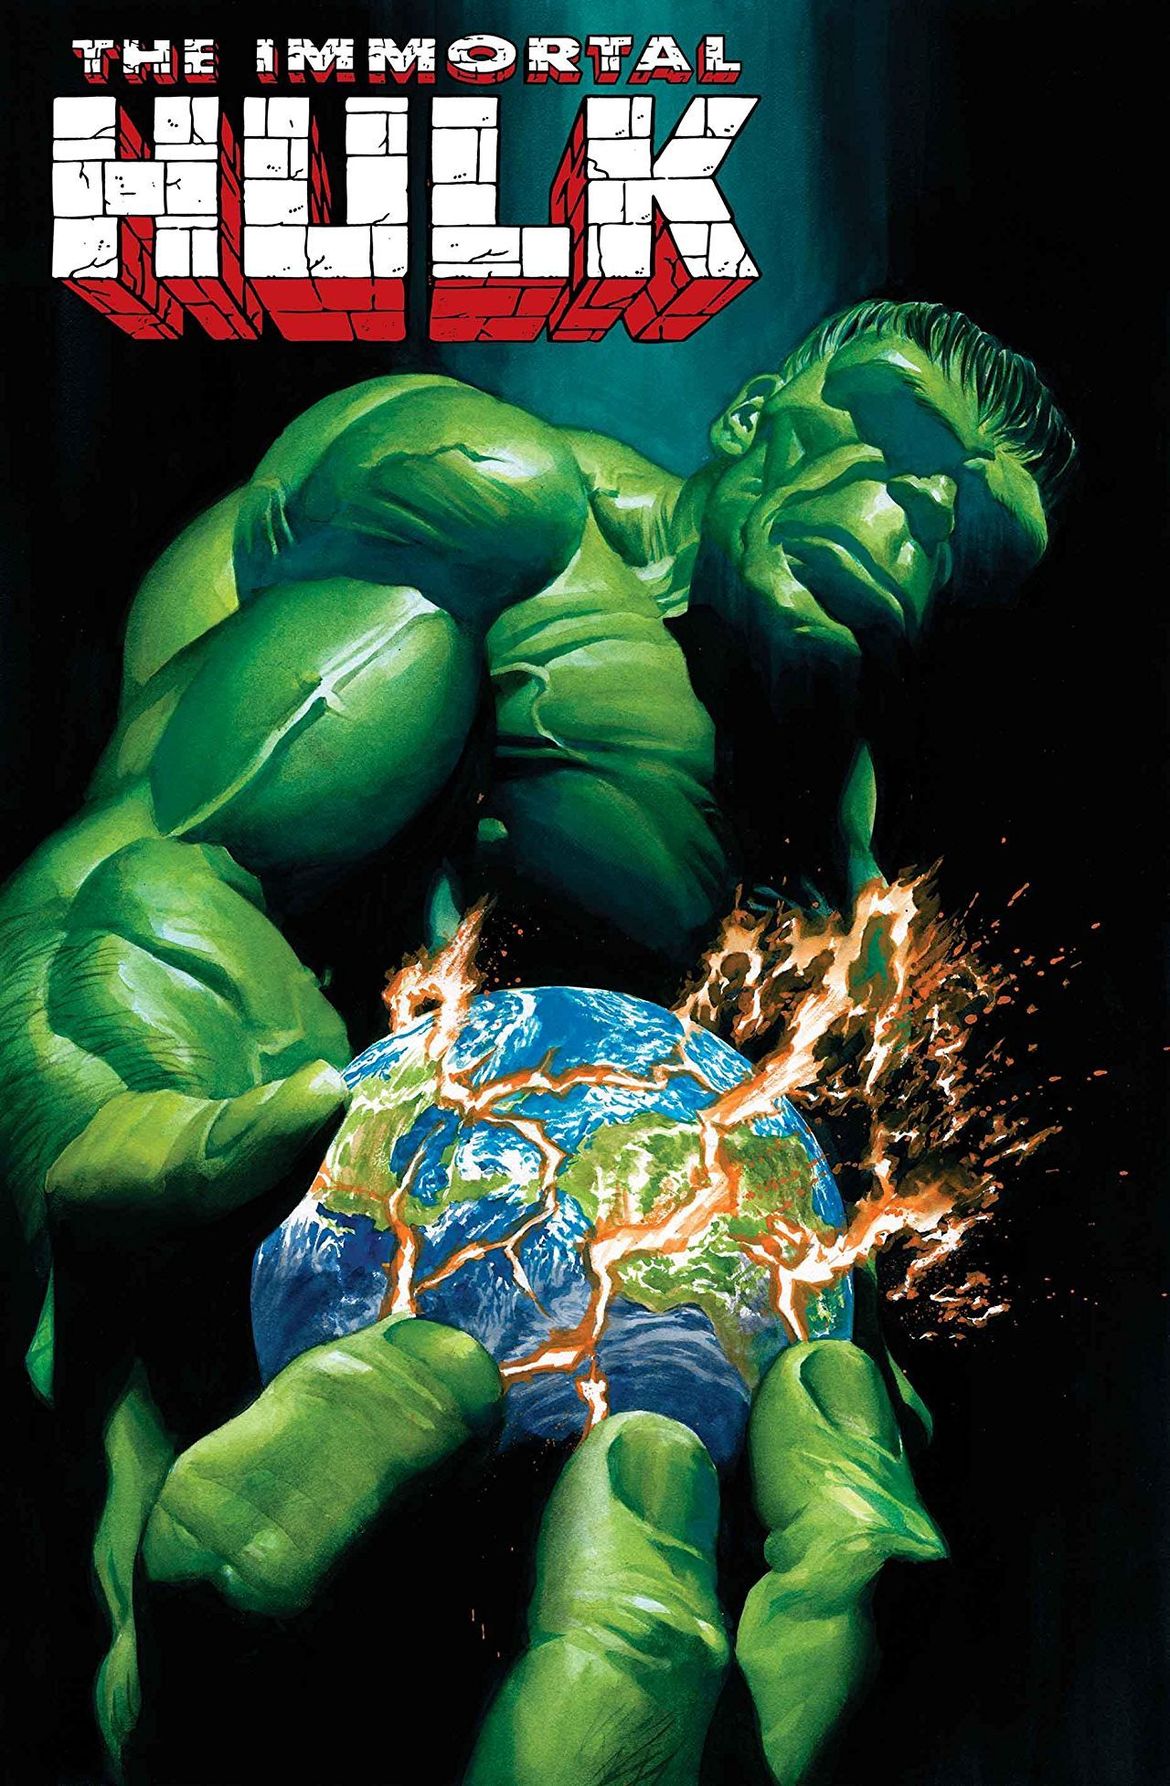 Al Ewing Hulks out: Why Immortal Hulk is the best Big-2 comic book